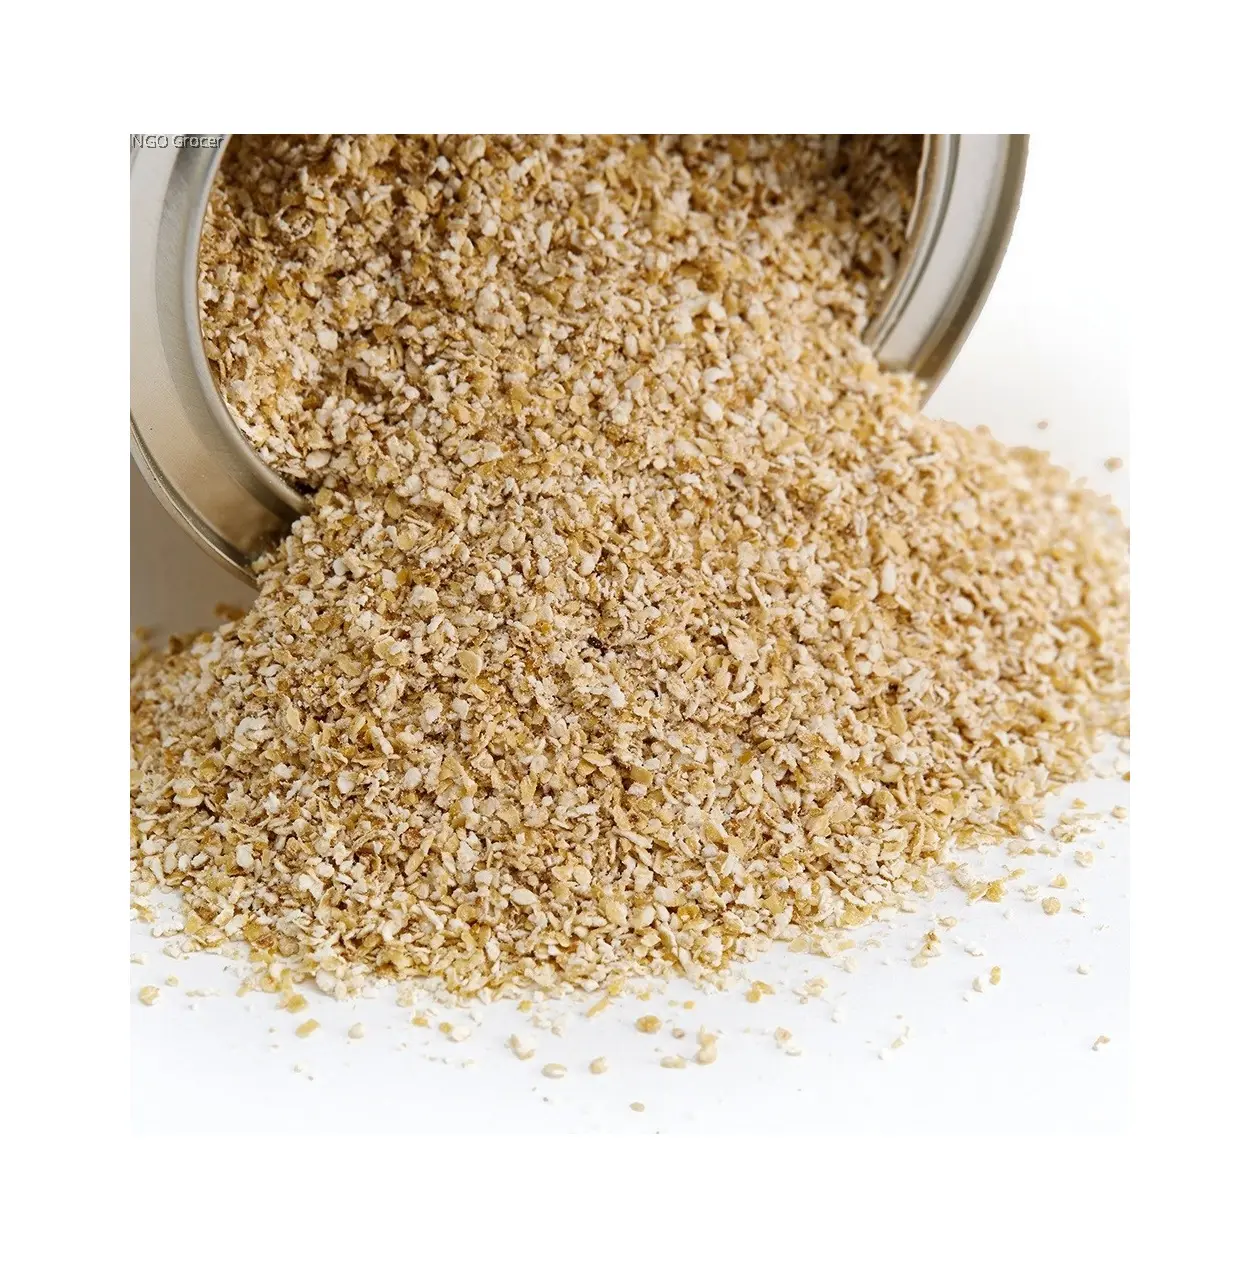 Hot Selling Price of Organic Oatbran / oat bran In Bulk